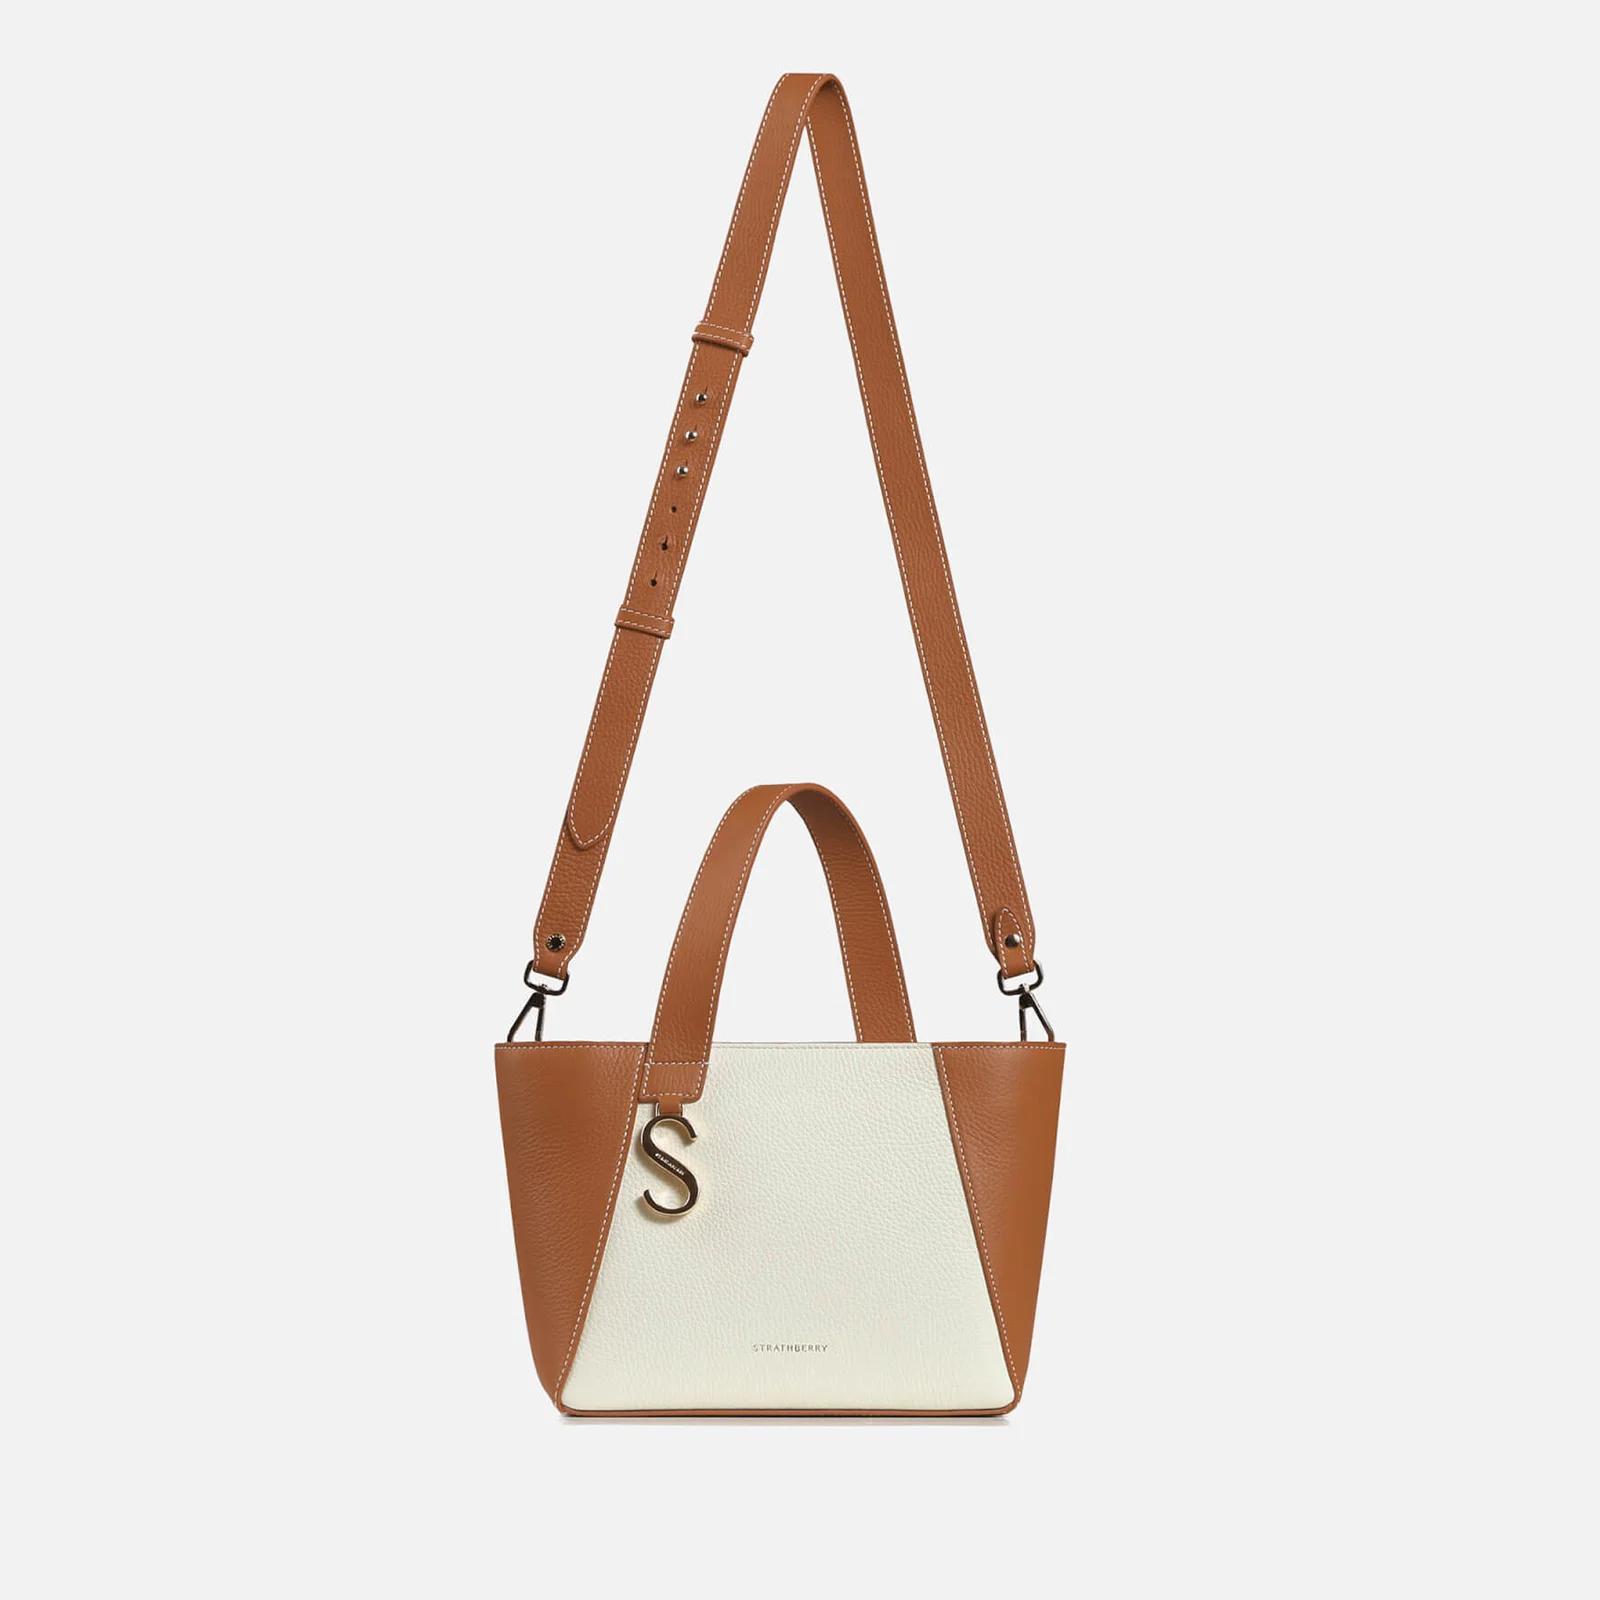 Strathberry Women's Cabas Mini Bag - Bi - Tan/Vanilla Image 1